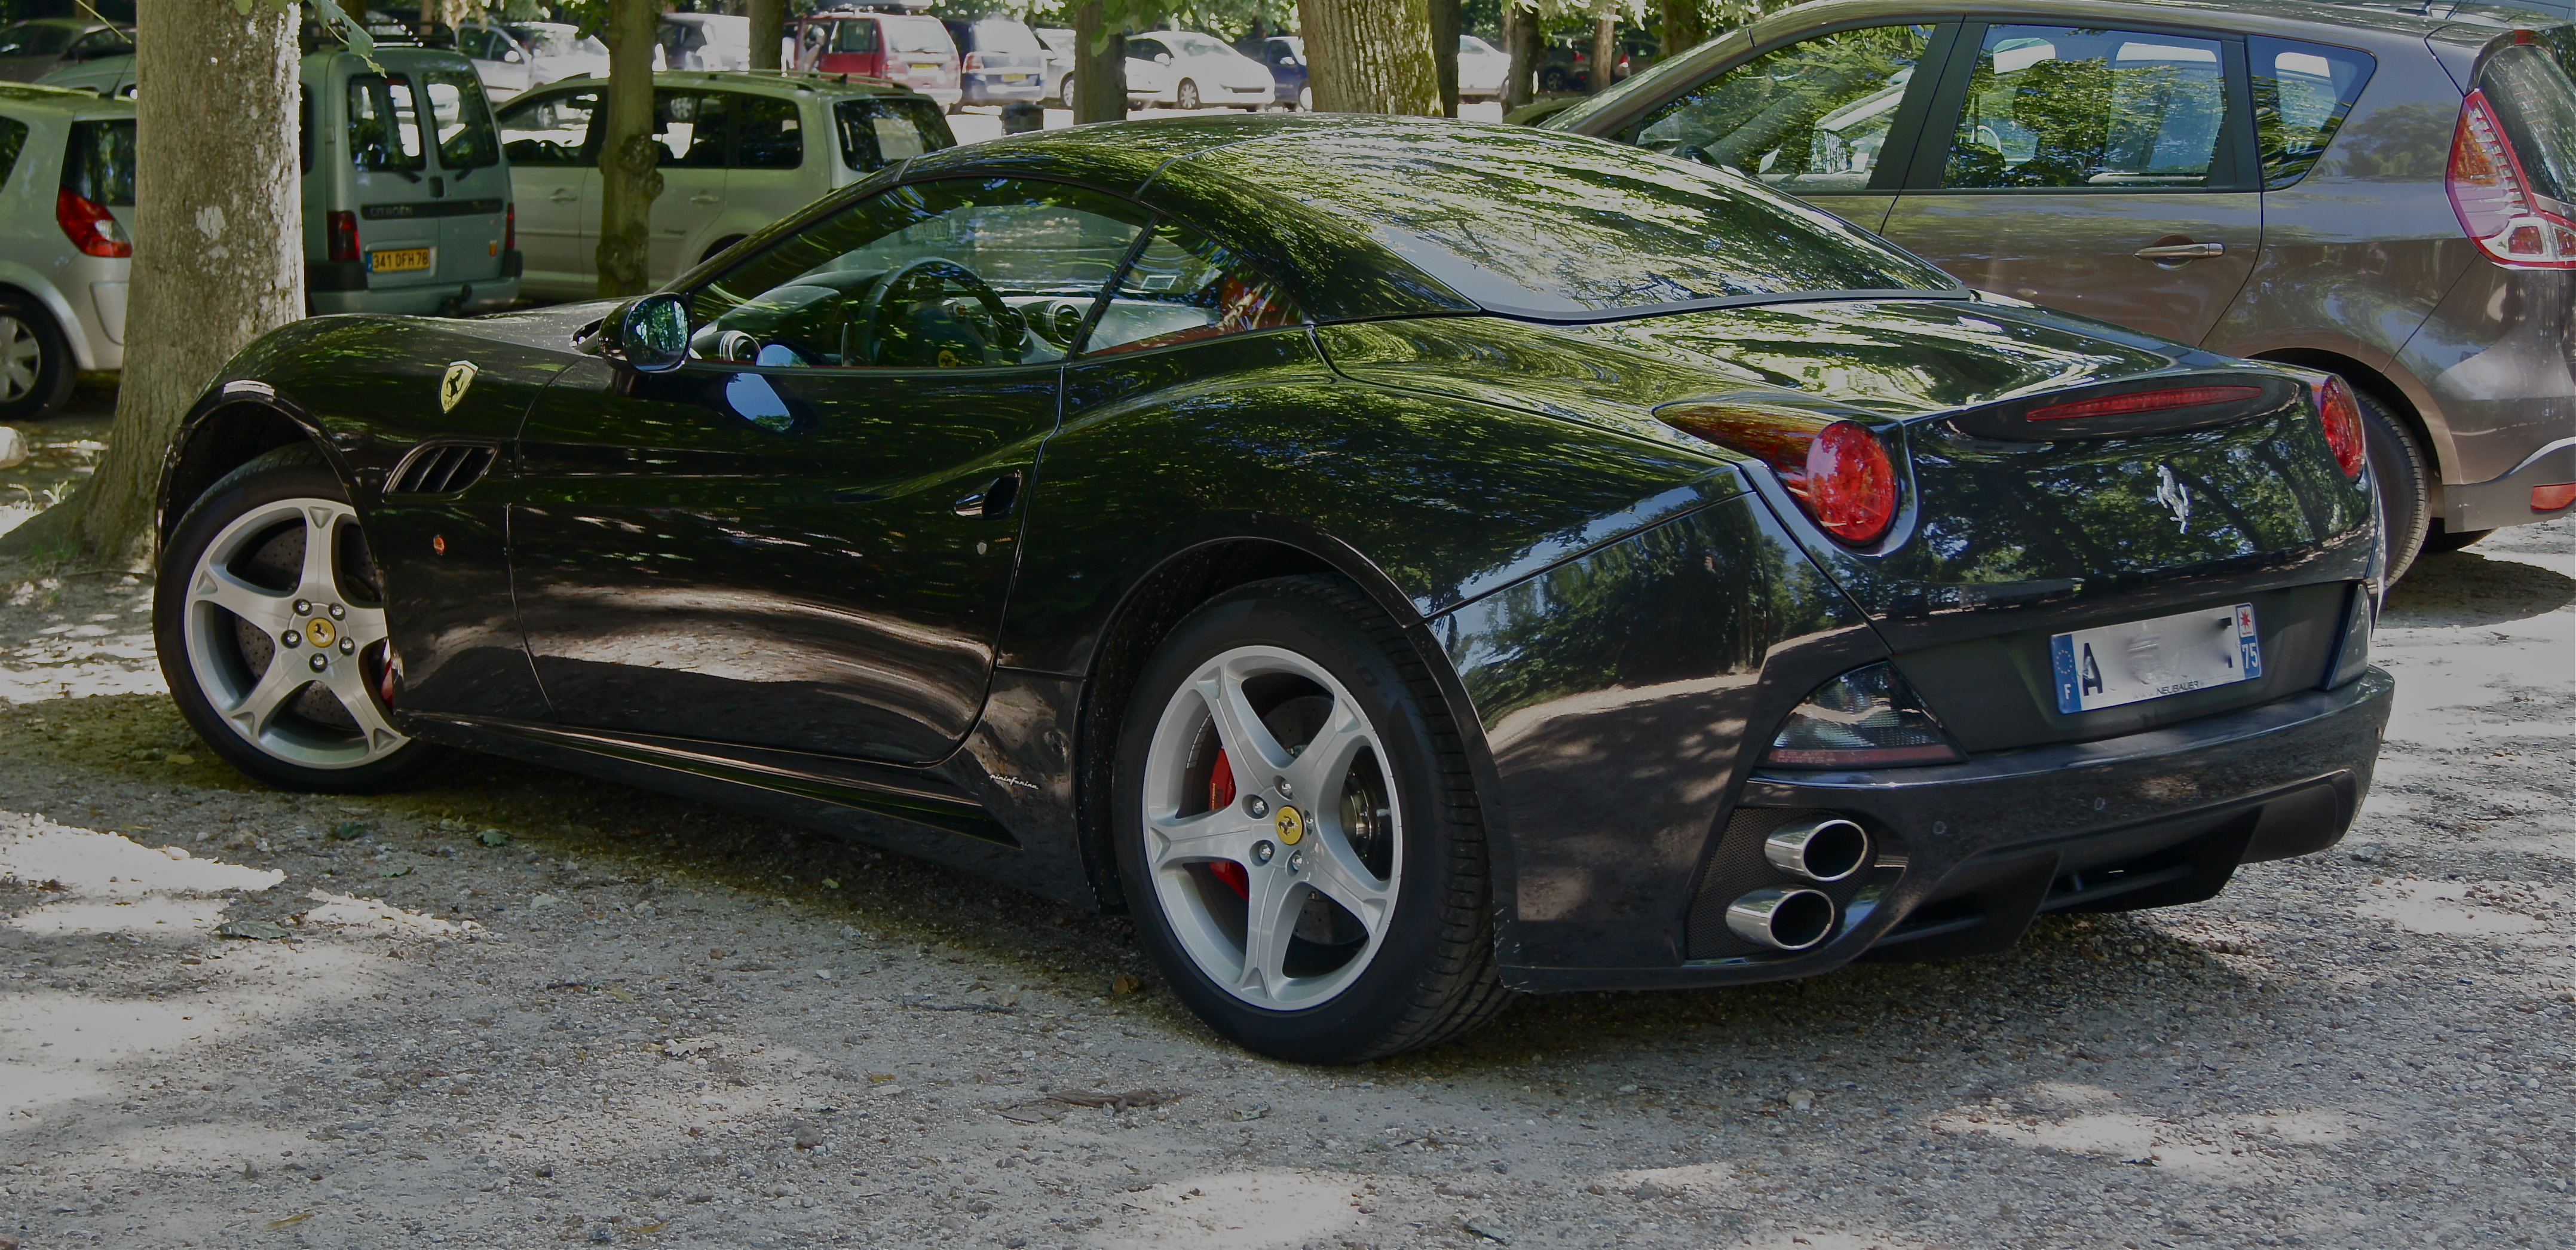 Black Ferrari California